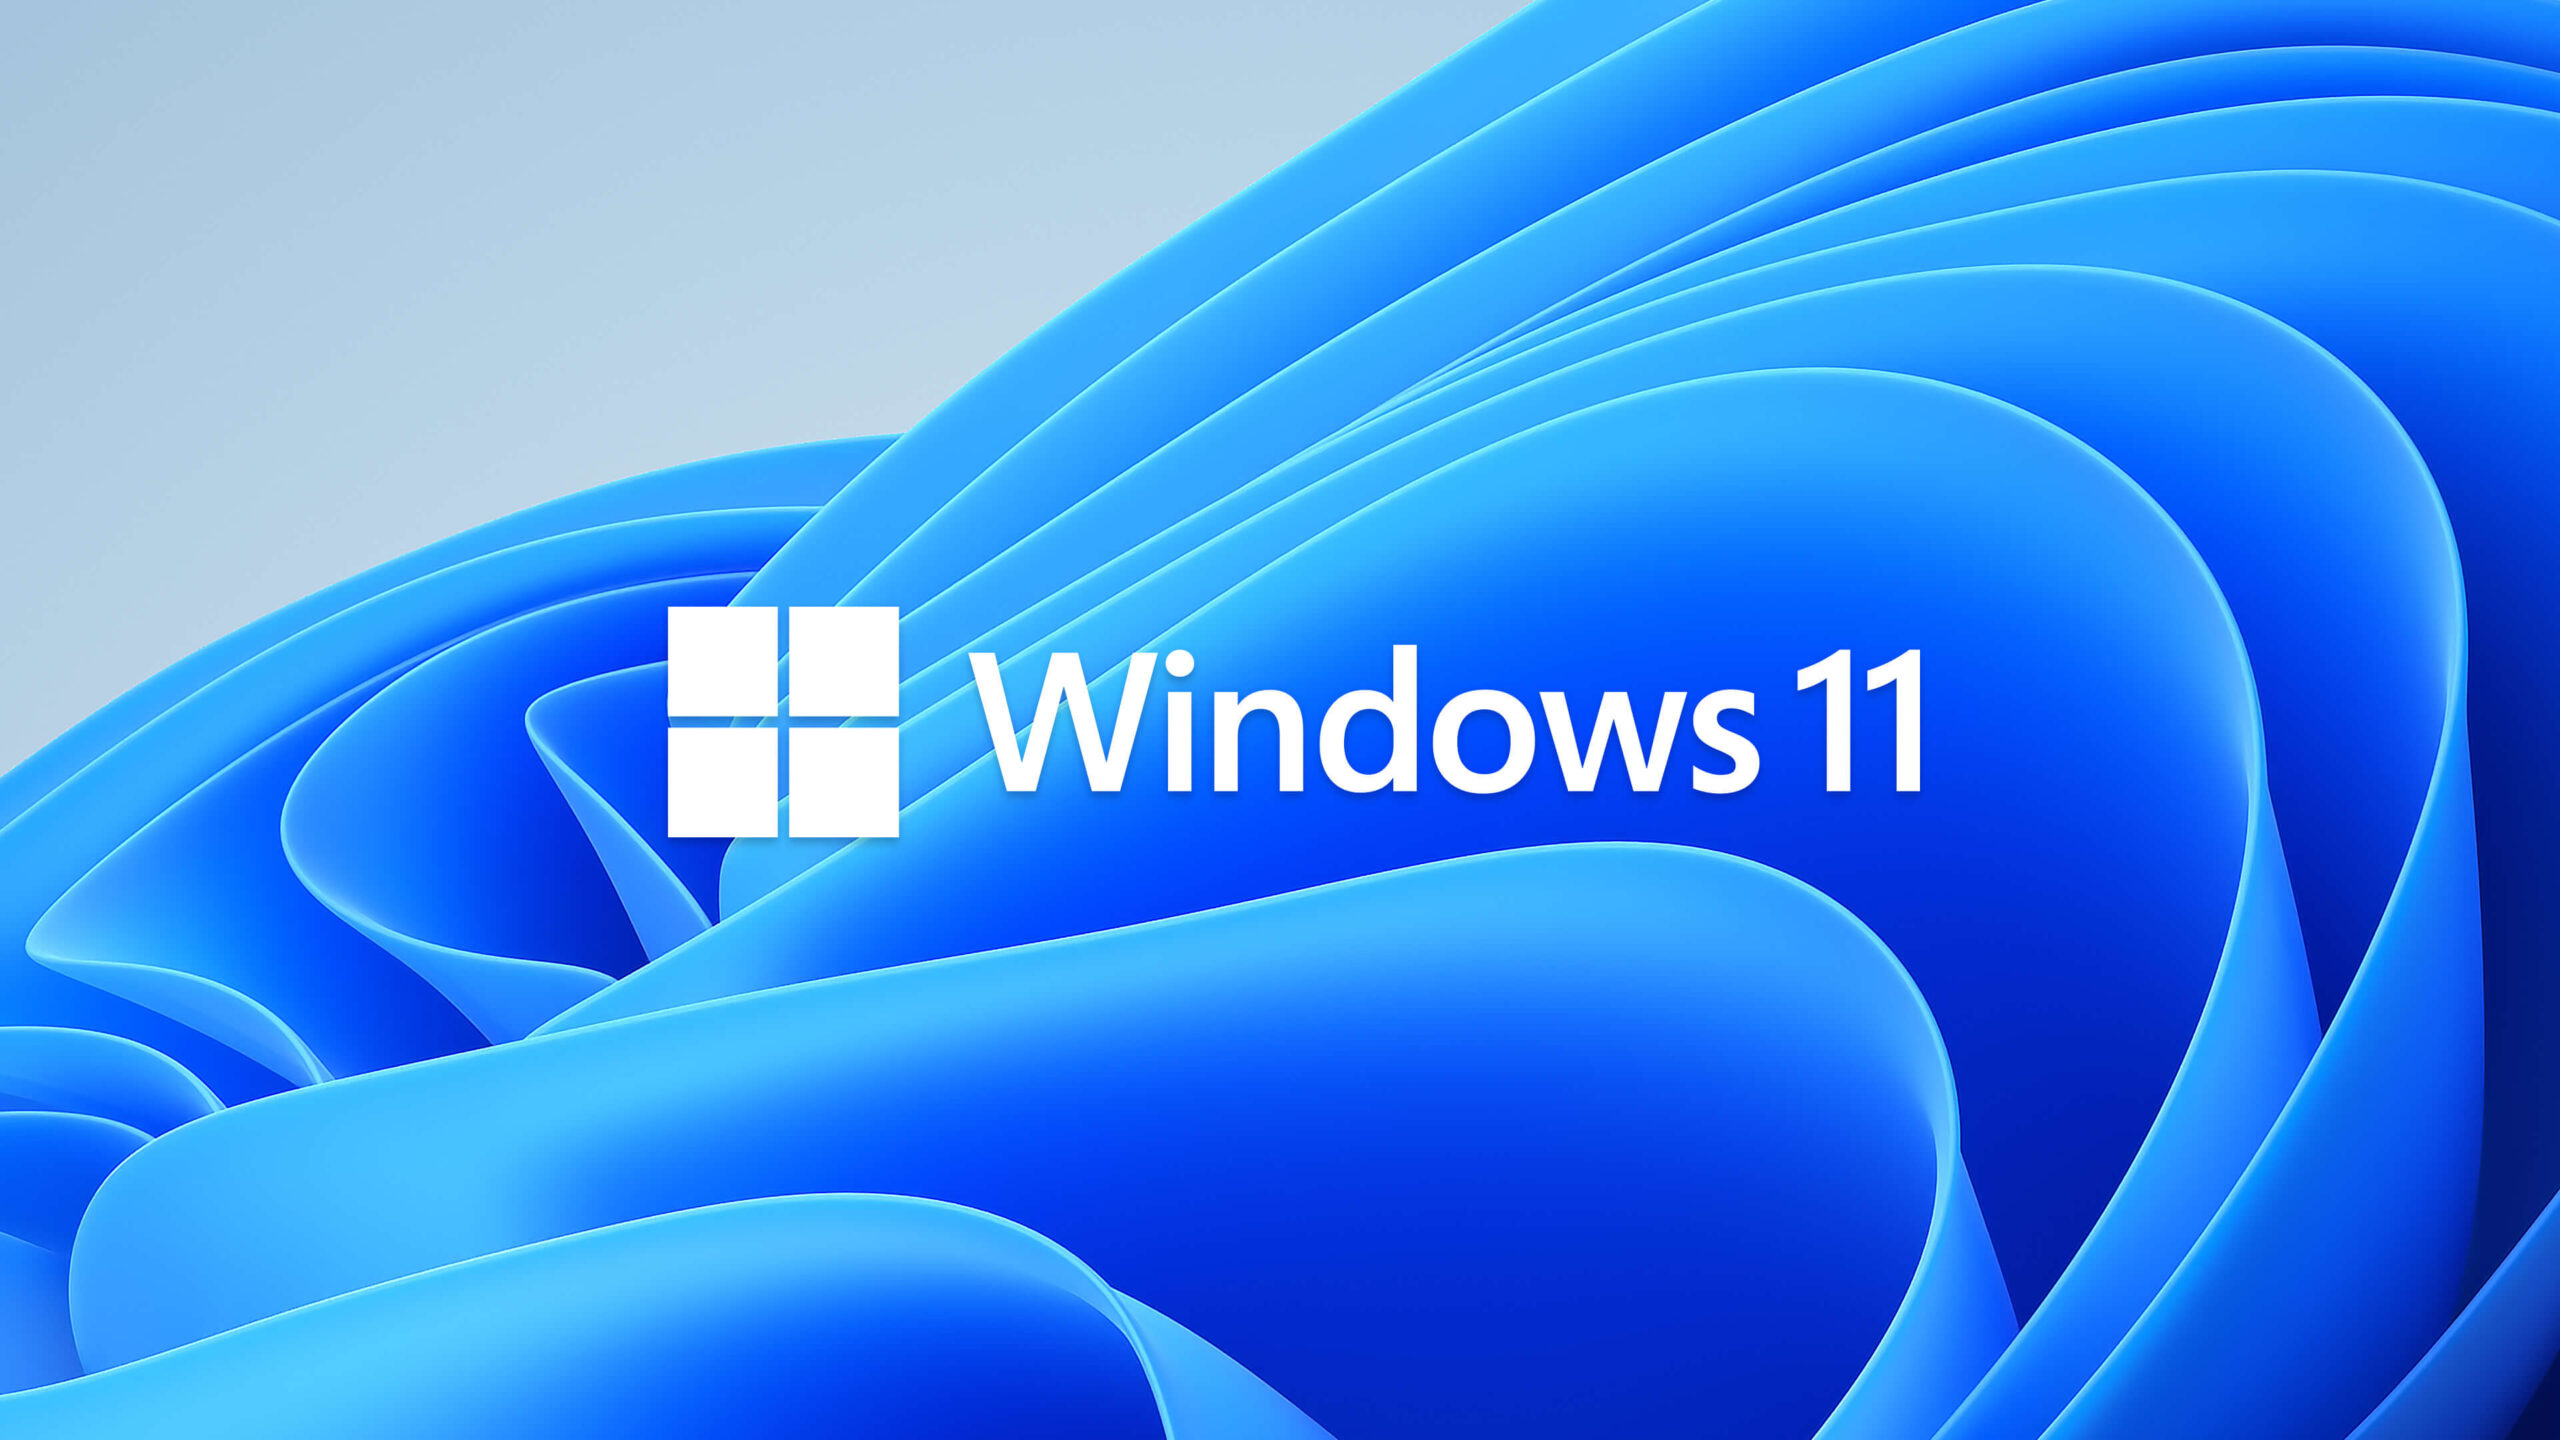 Microsoft's Windows 11